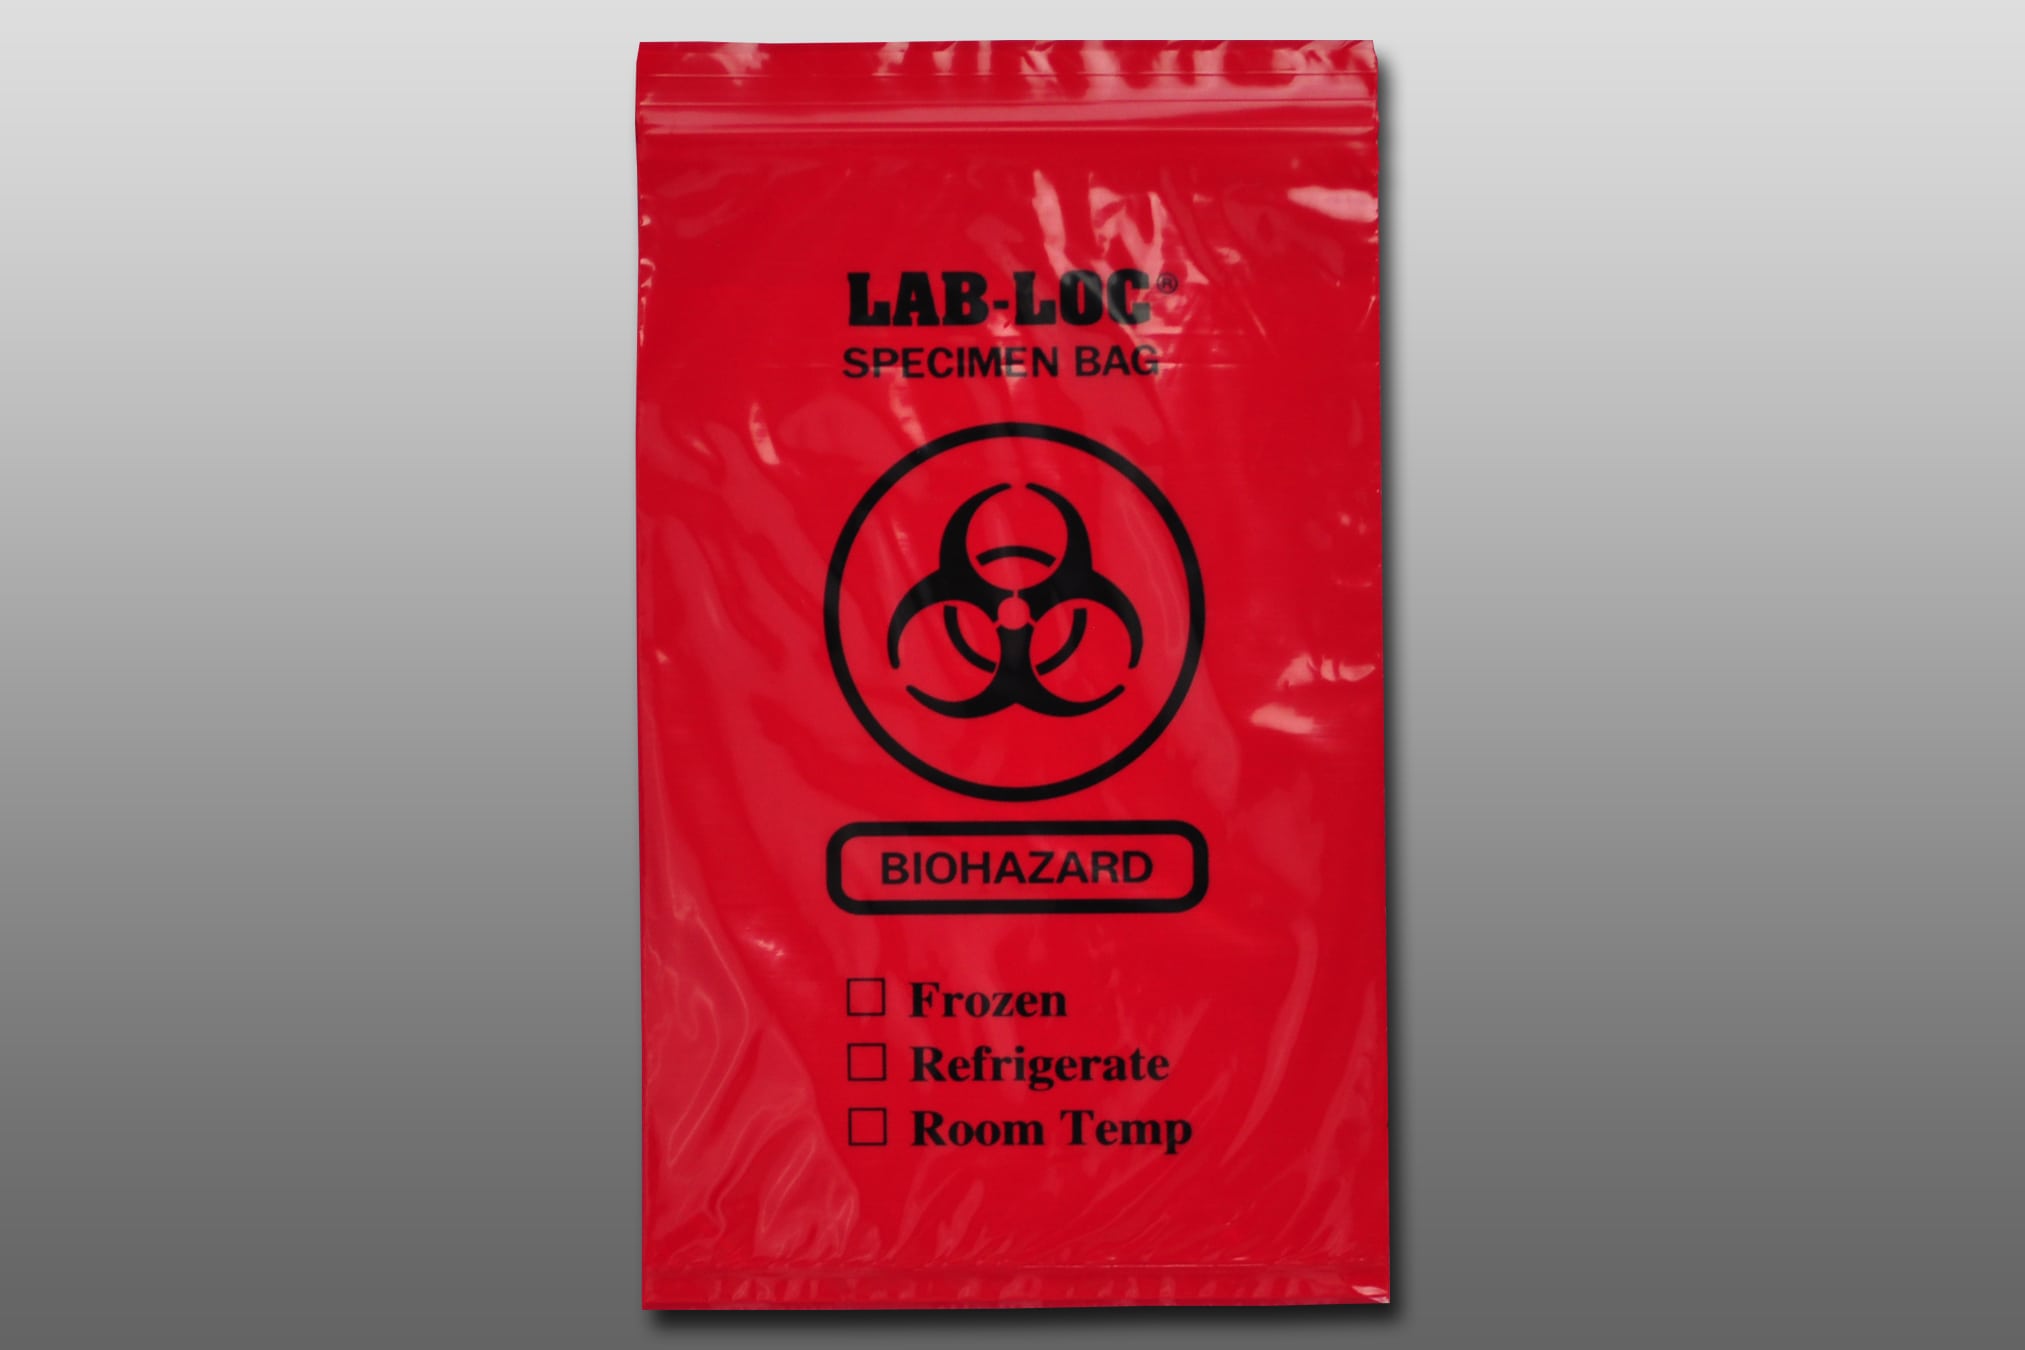 6" X 9" Red Tint Reclosable 3-Wall Specimen Transfer Bag (Biohazard)